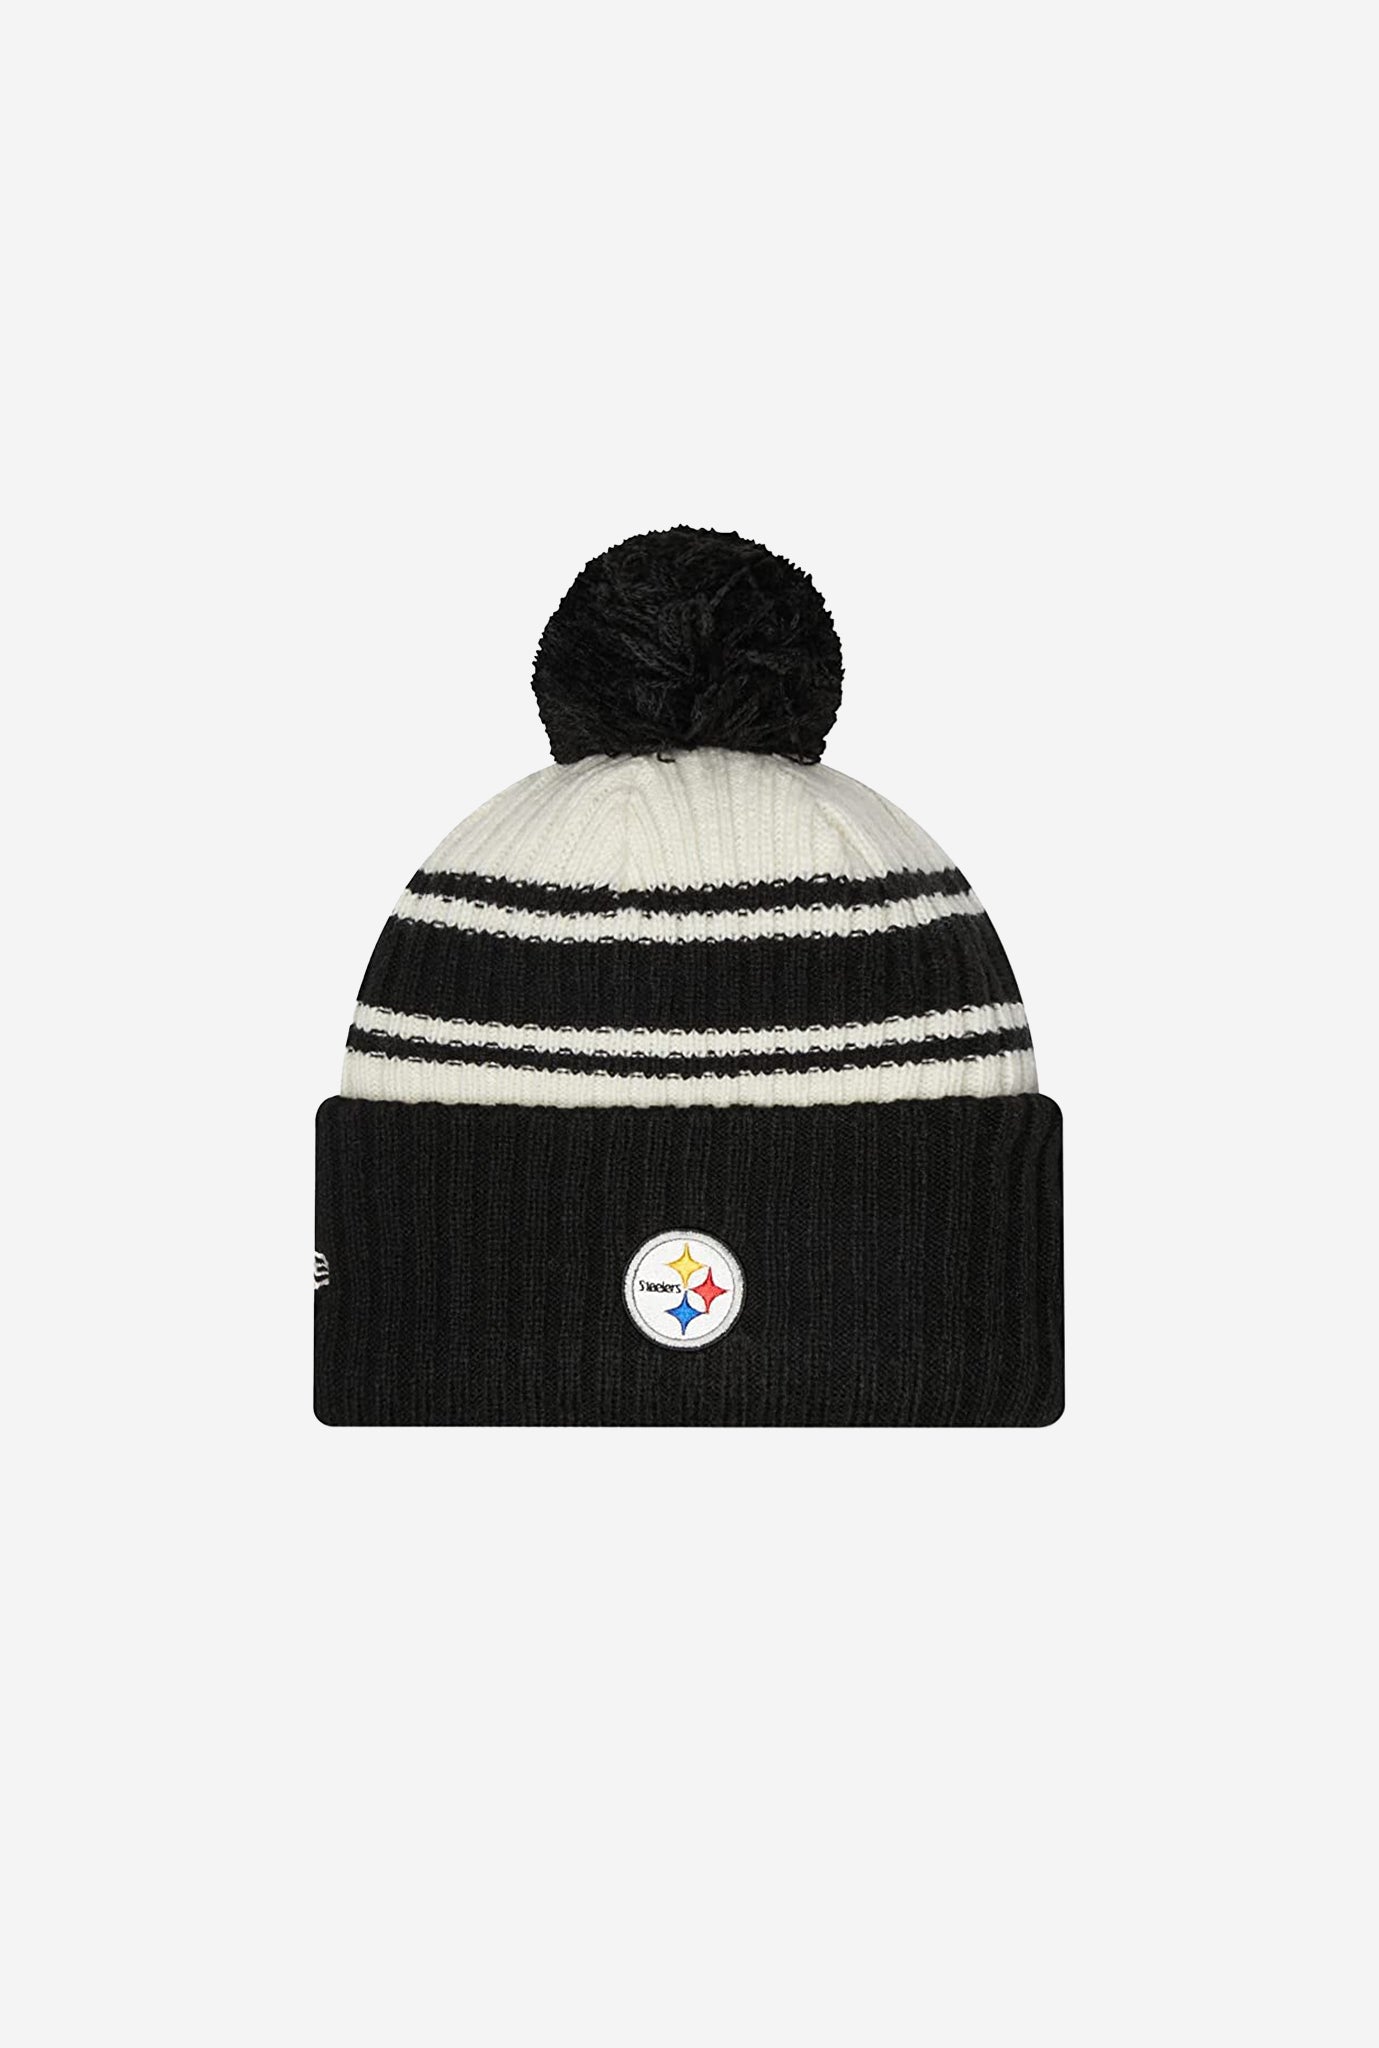 Pittsburgh Steelers Sideline Sport Knit Beanie